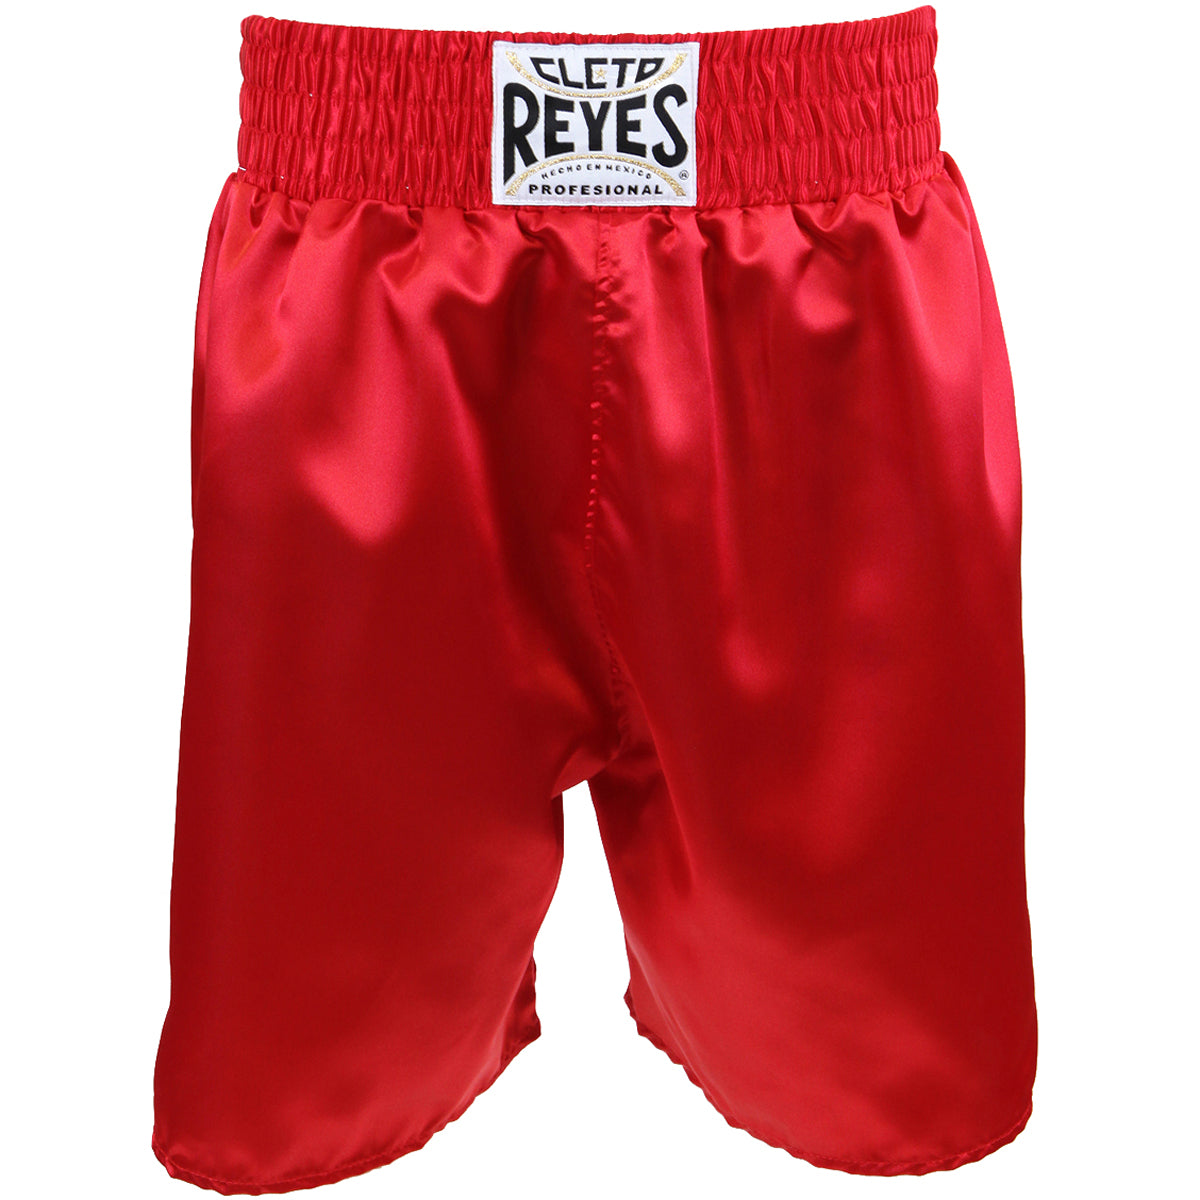 Cleto Reyes Satin Classic Boxing Trunks - XL (44") - Red Cleto Reyes